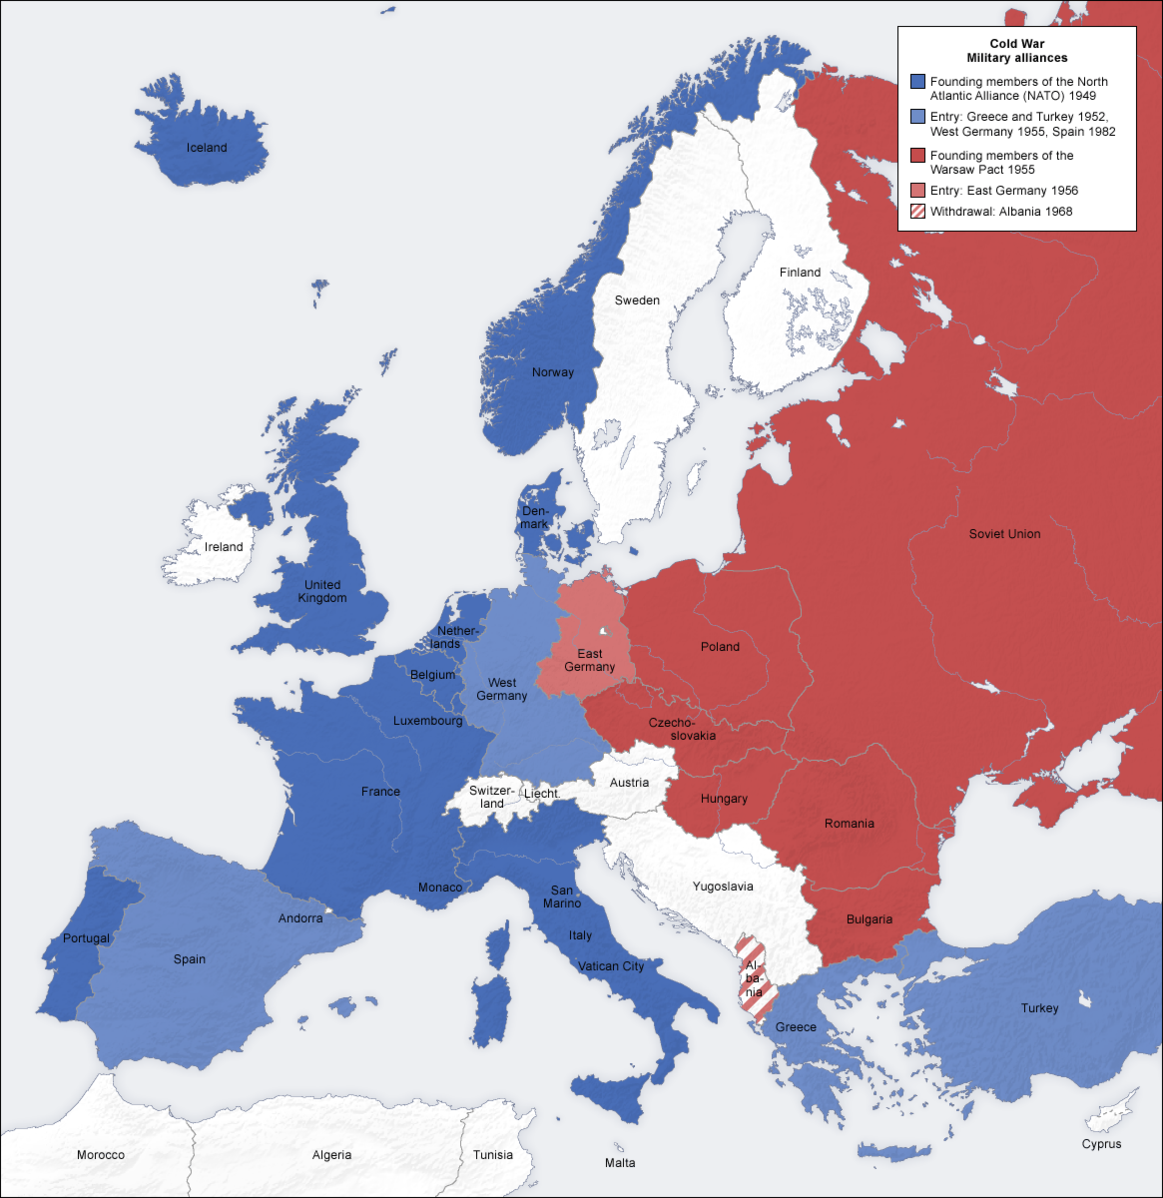 1163px-Cold_war_europe_military_alliances_map_en.png